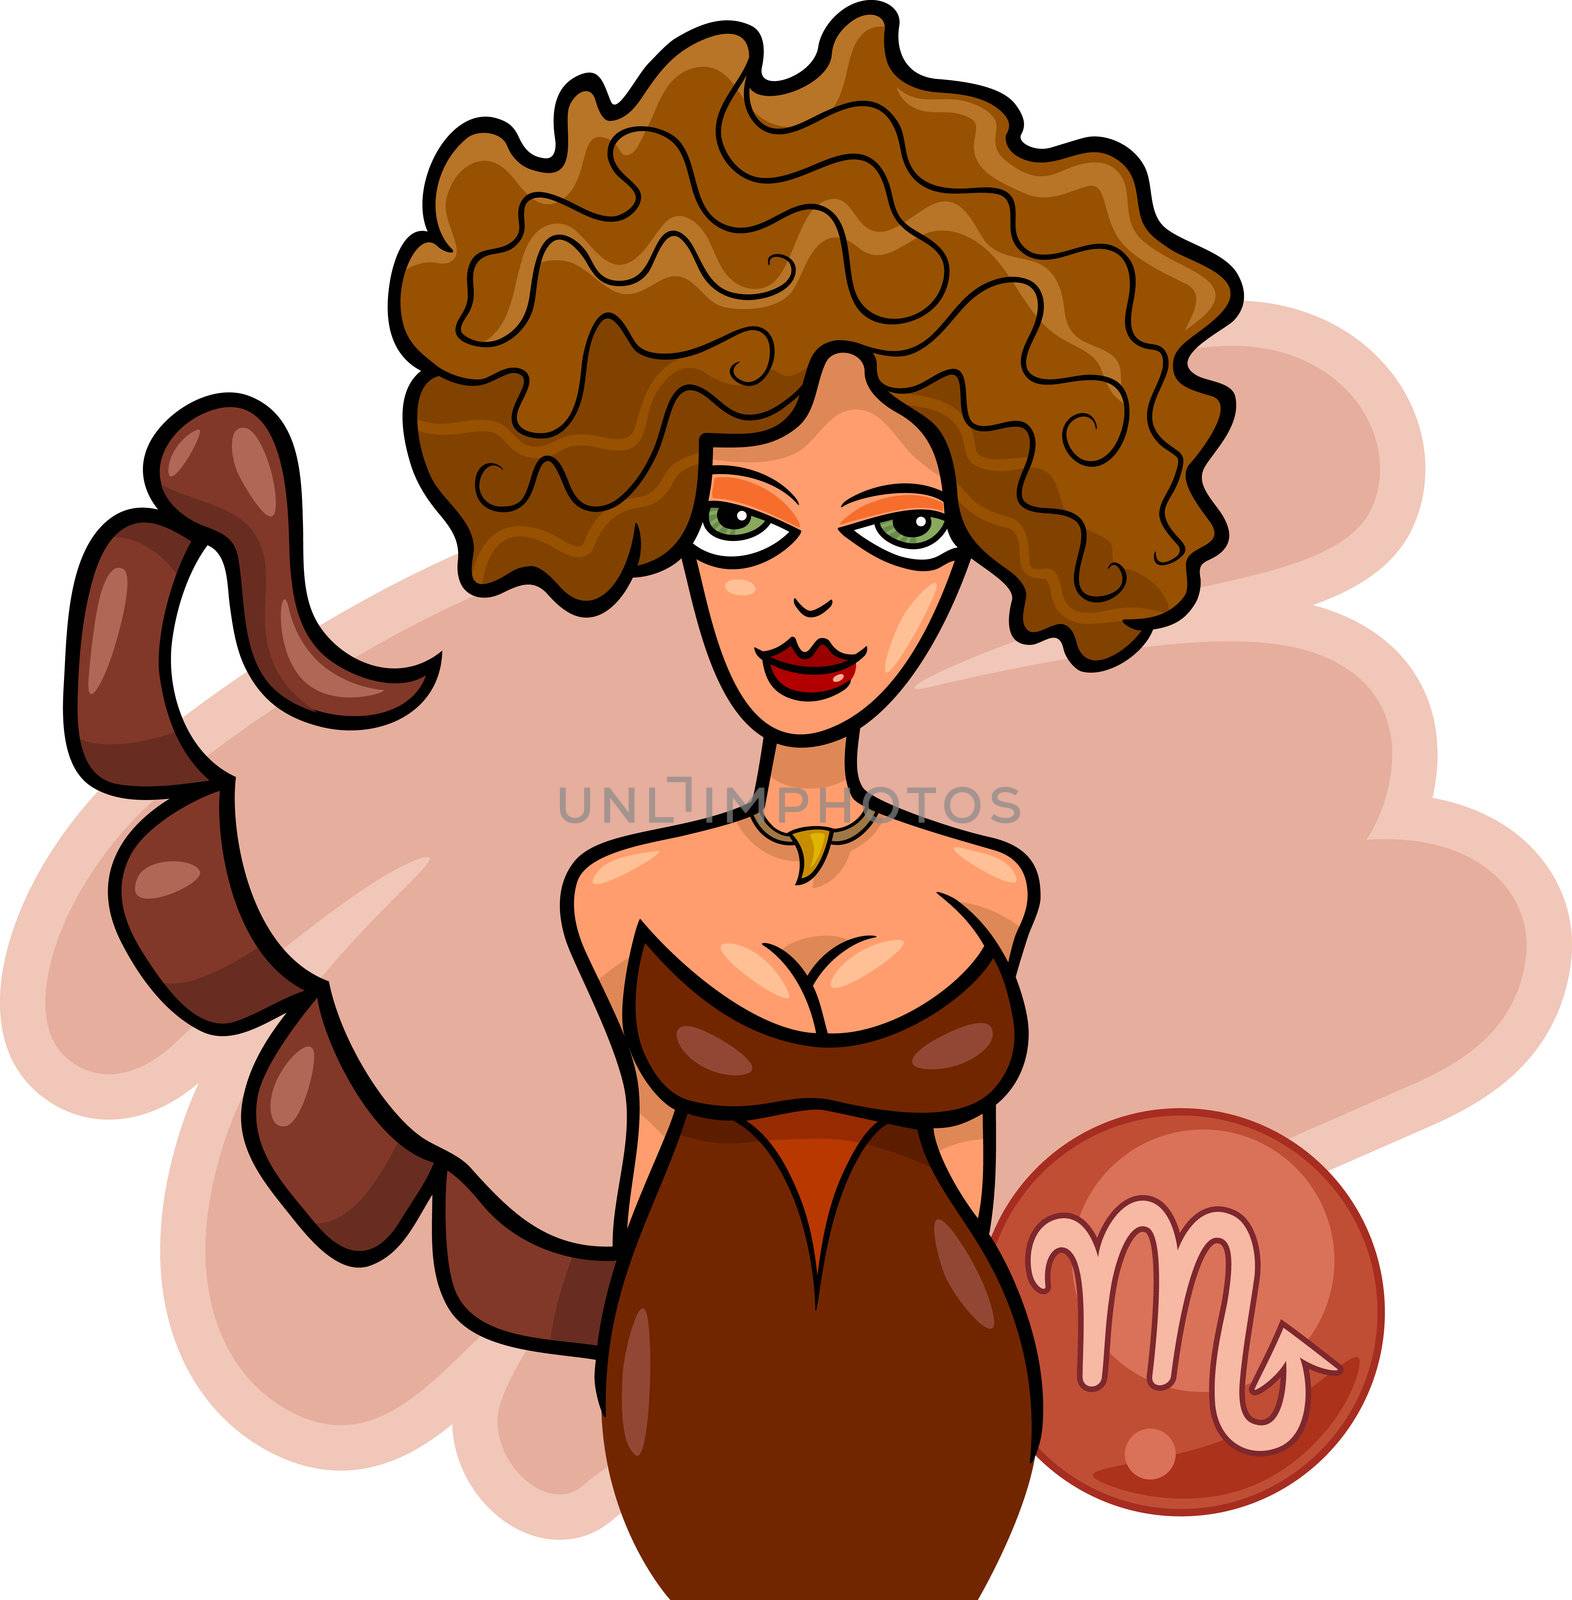 Illustration of Beautiful Woman Cartoon Character with Scorpion Tail and Scorpio Horoscope Zodiac Sign